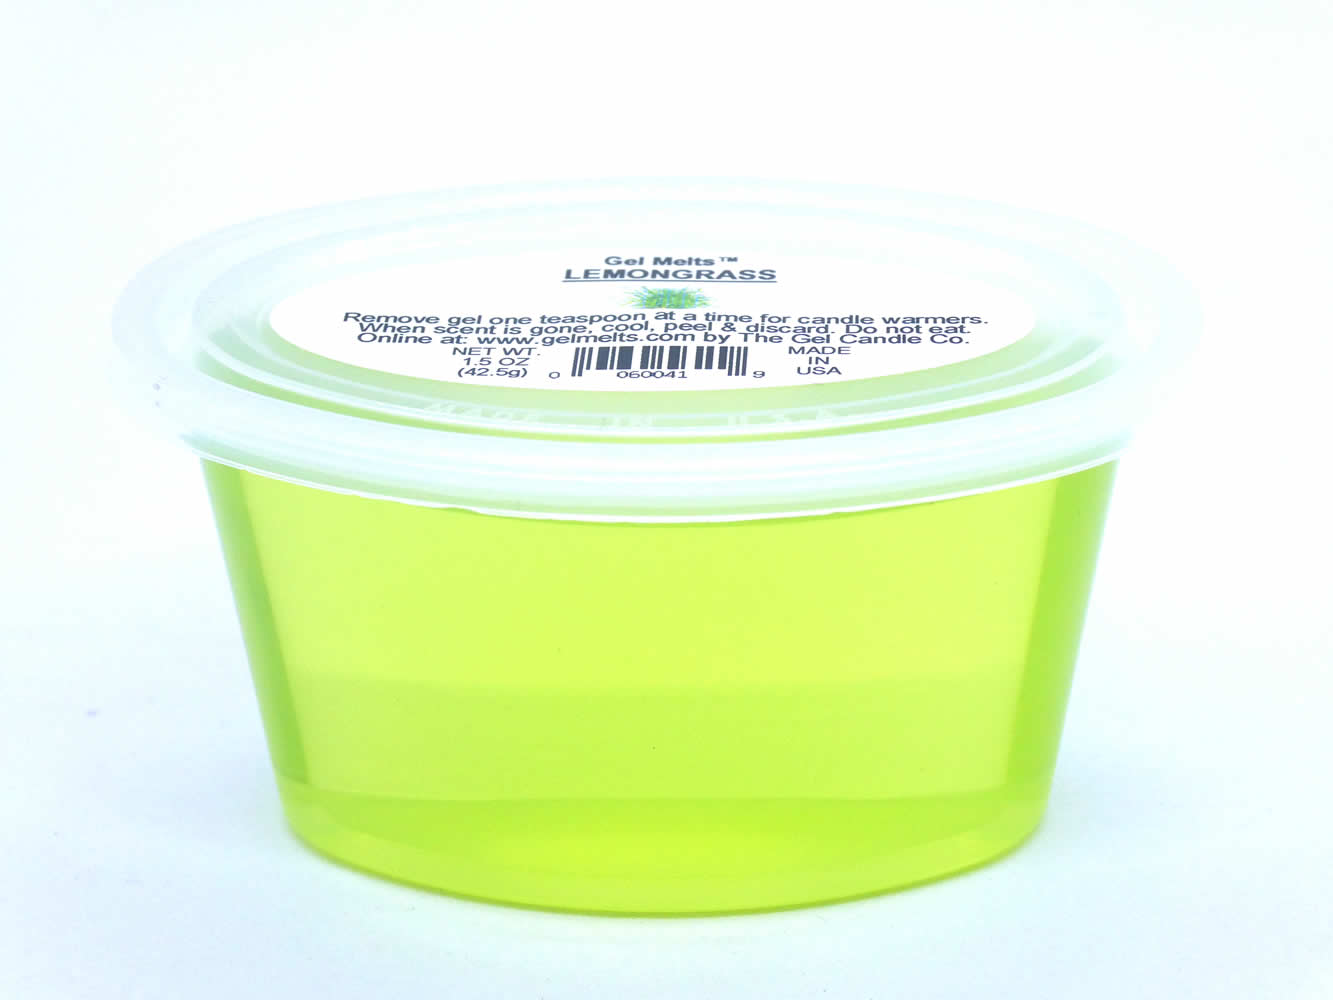 Lemongrass scented Gel Melts™ Gel Wax for warmers - 3 pack